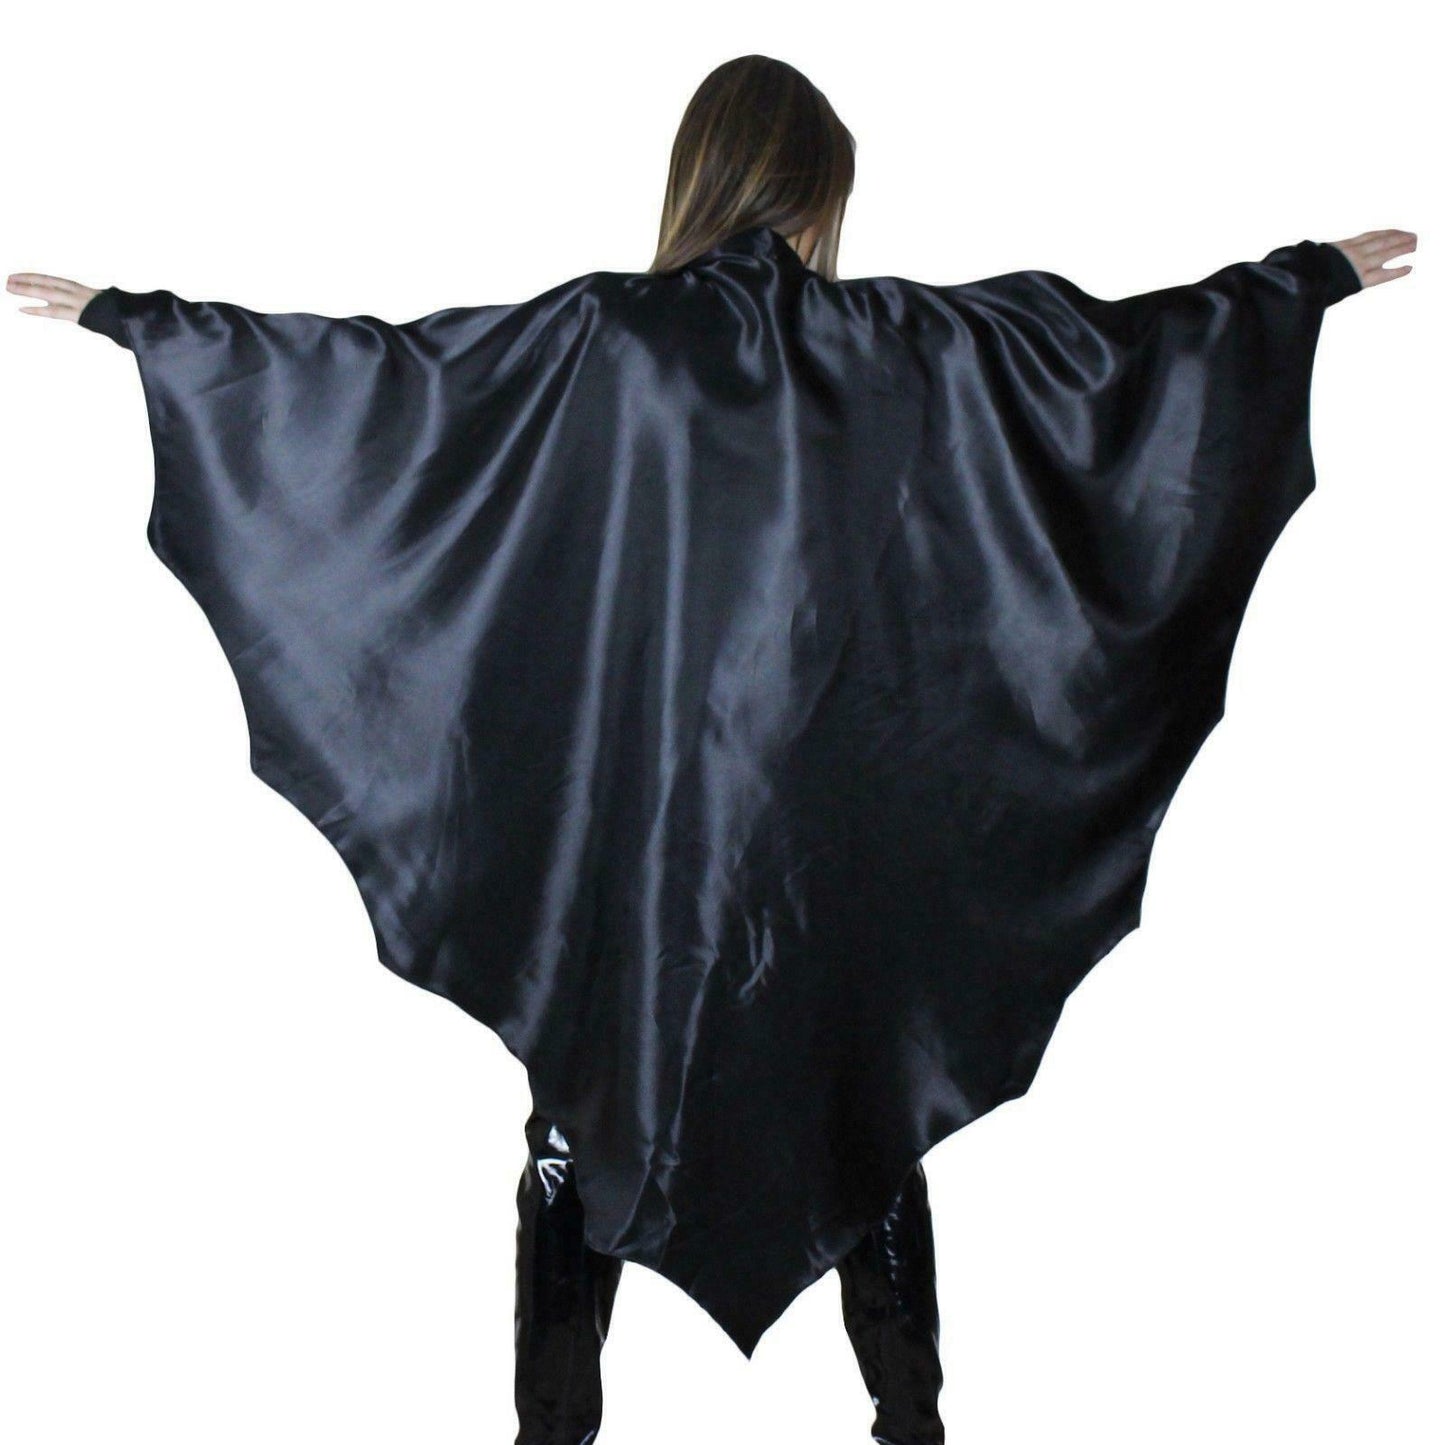 Sexy Bat costume